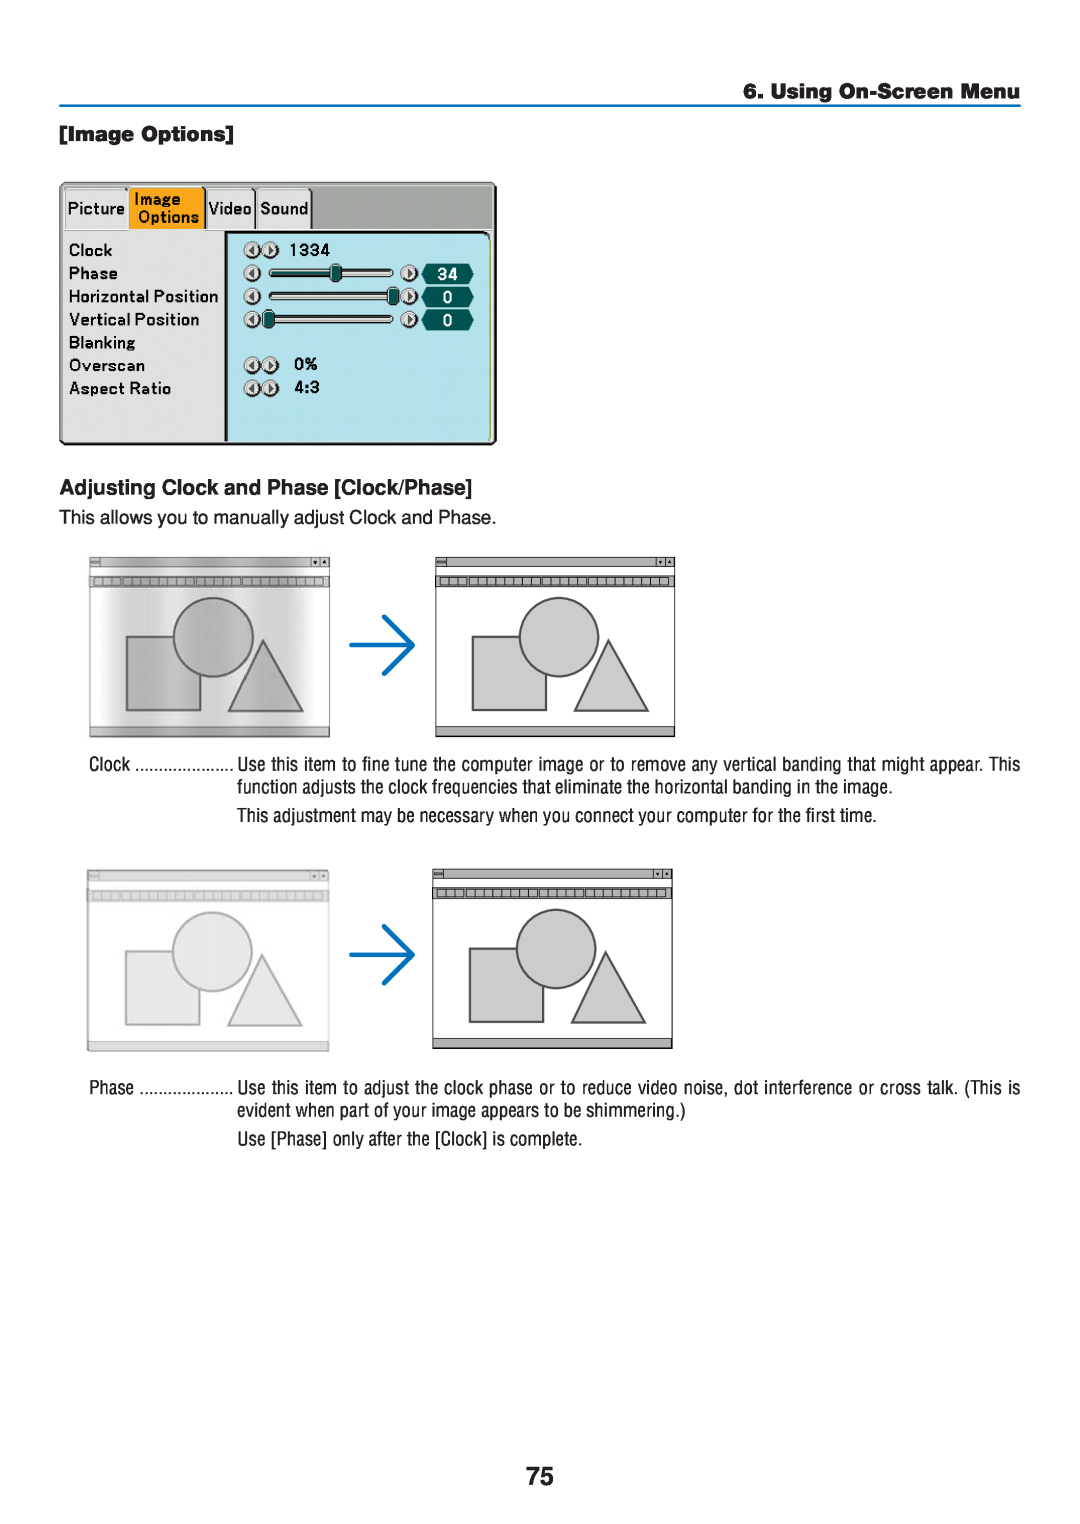 Dukane 8808 user manual Using On-Screen Menu Image Options, Adjusting Clock and Phase Clock/Phase 